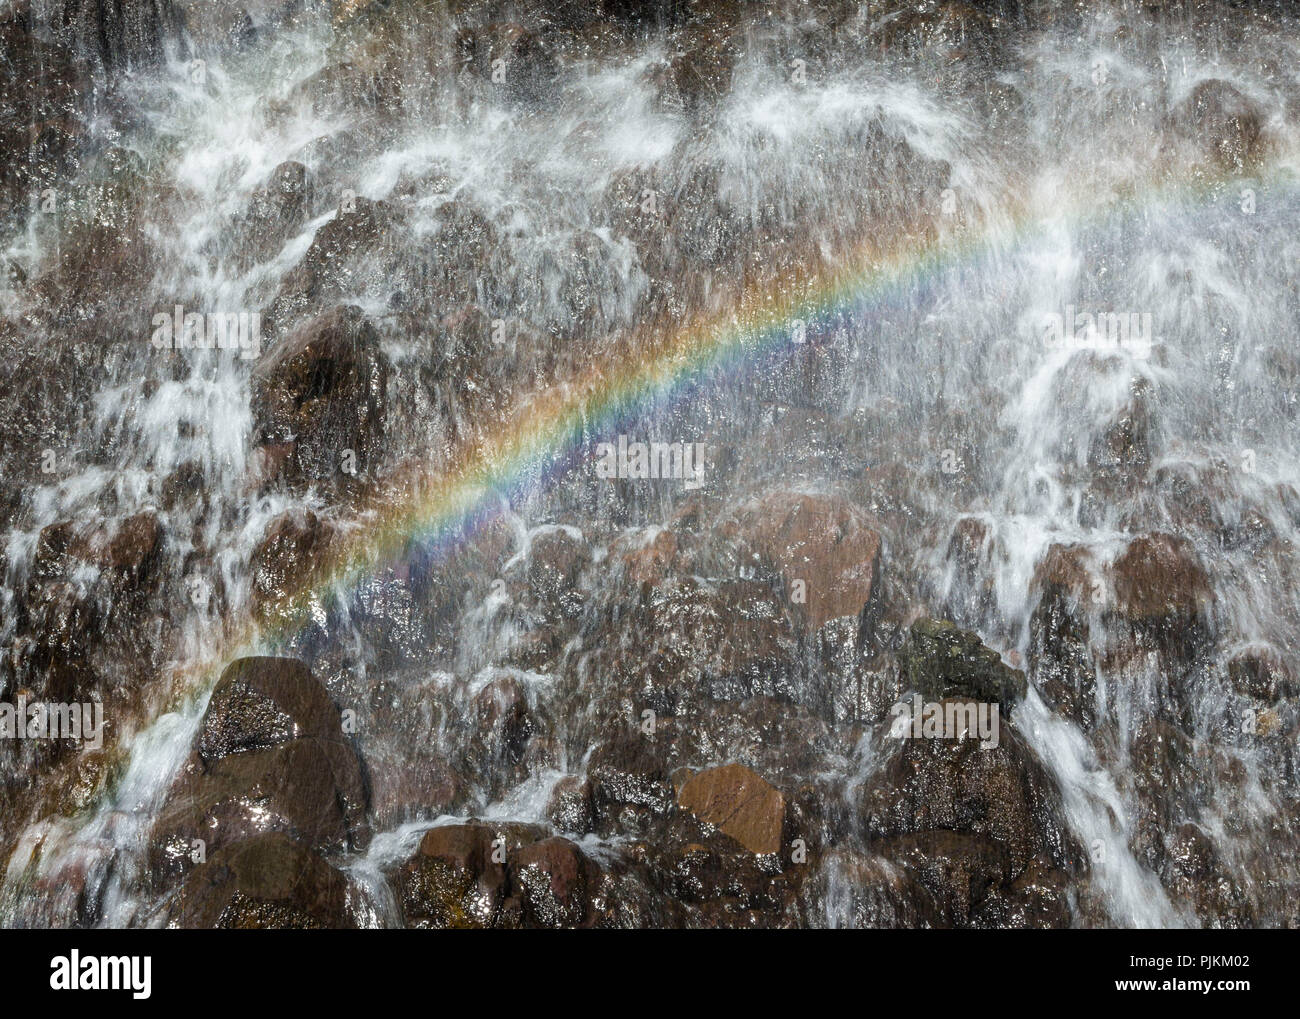 Iceland, waterfall, detail with rainbow, splashing water, red stones Stock Photo